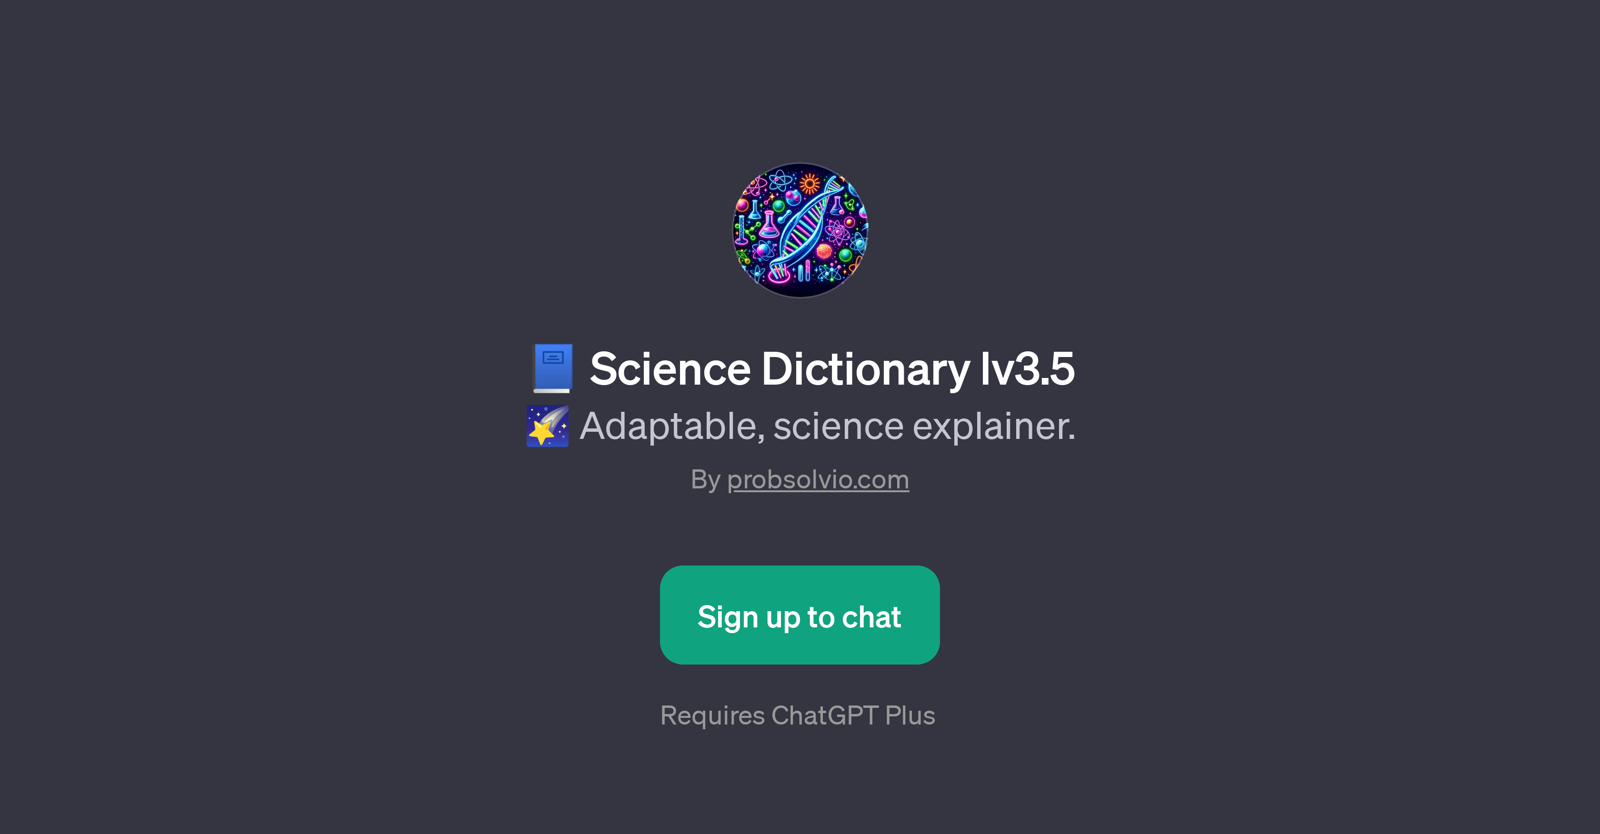 Science Dictionary lv3.5 website